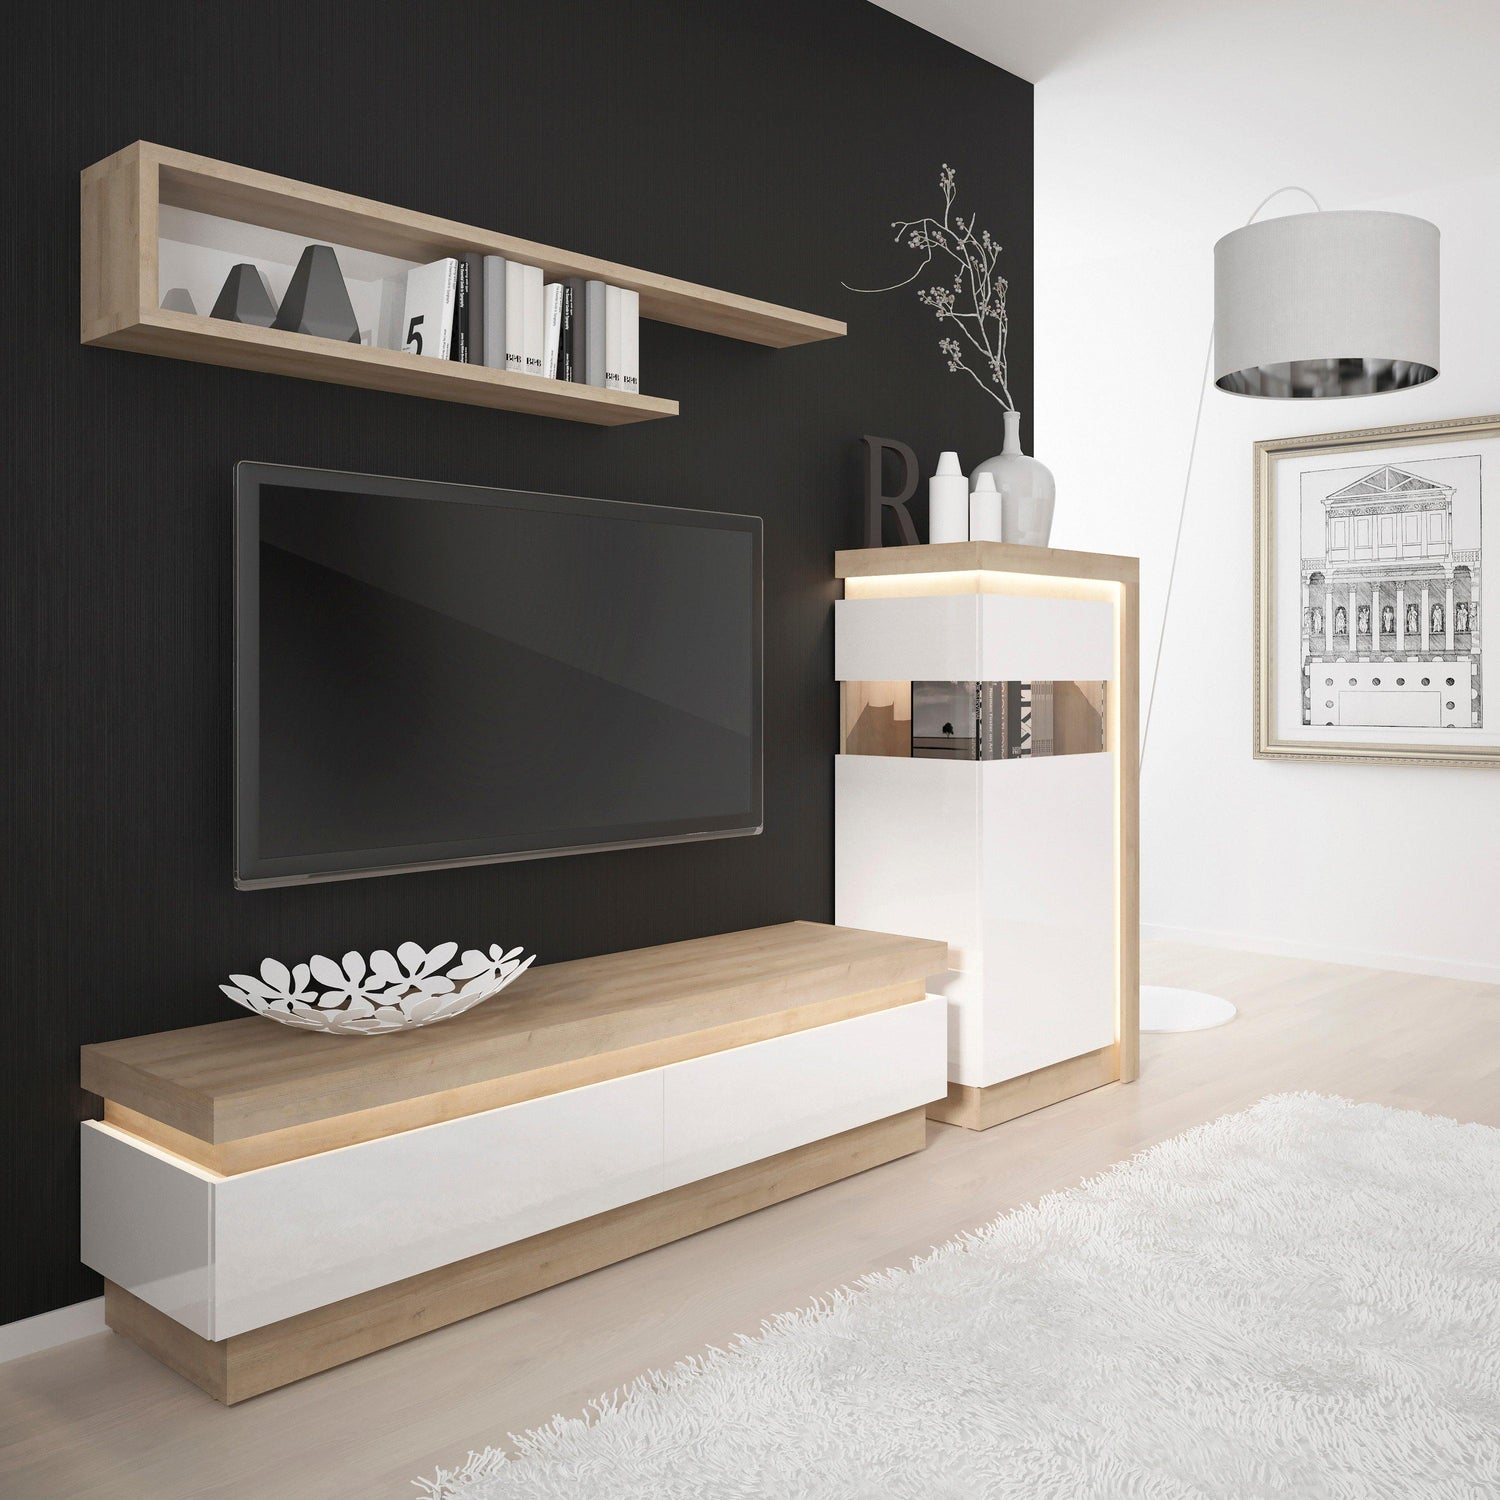 2 drawer TV cabinet (including LED lighting) - Home Utopia 